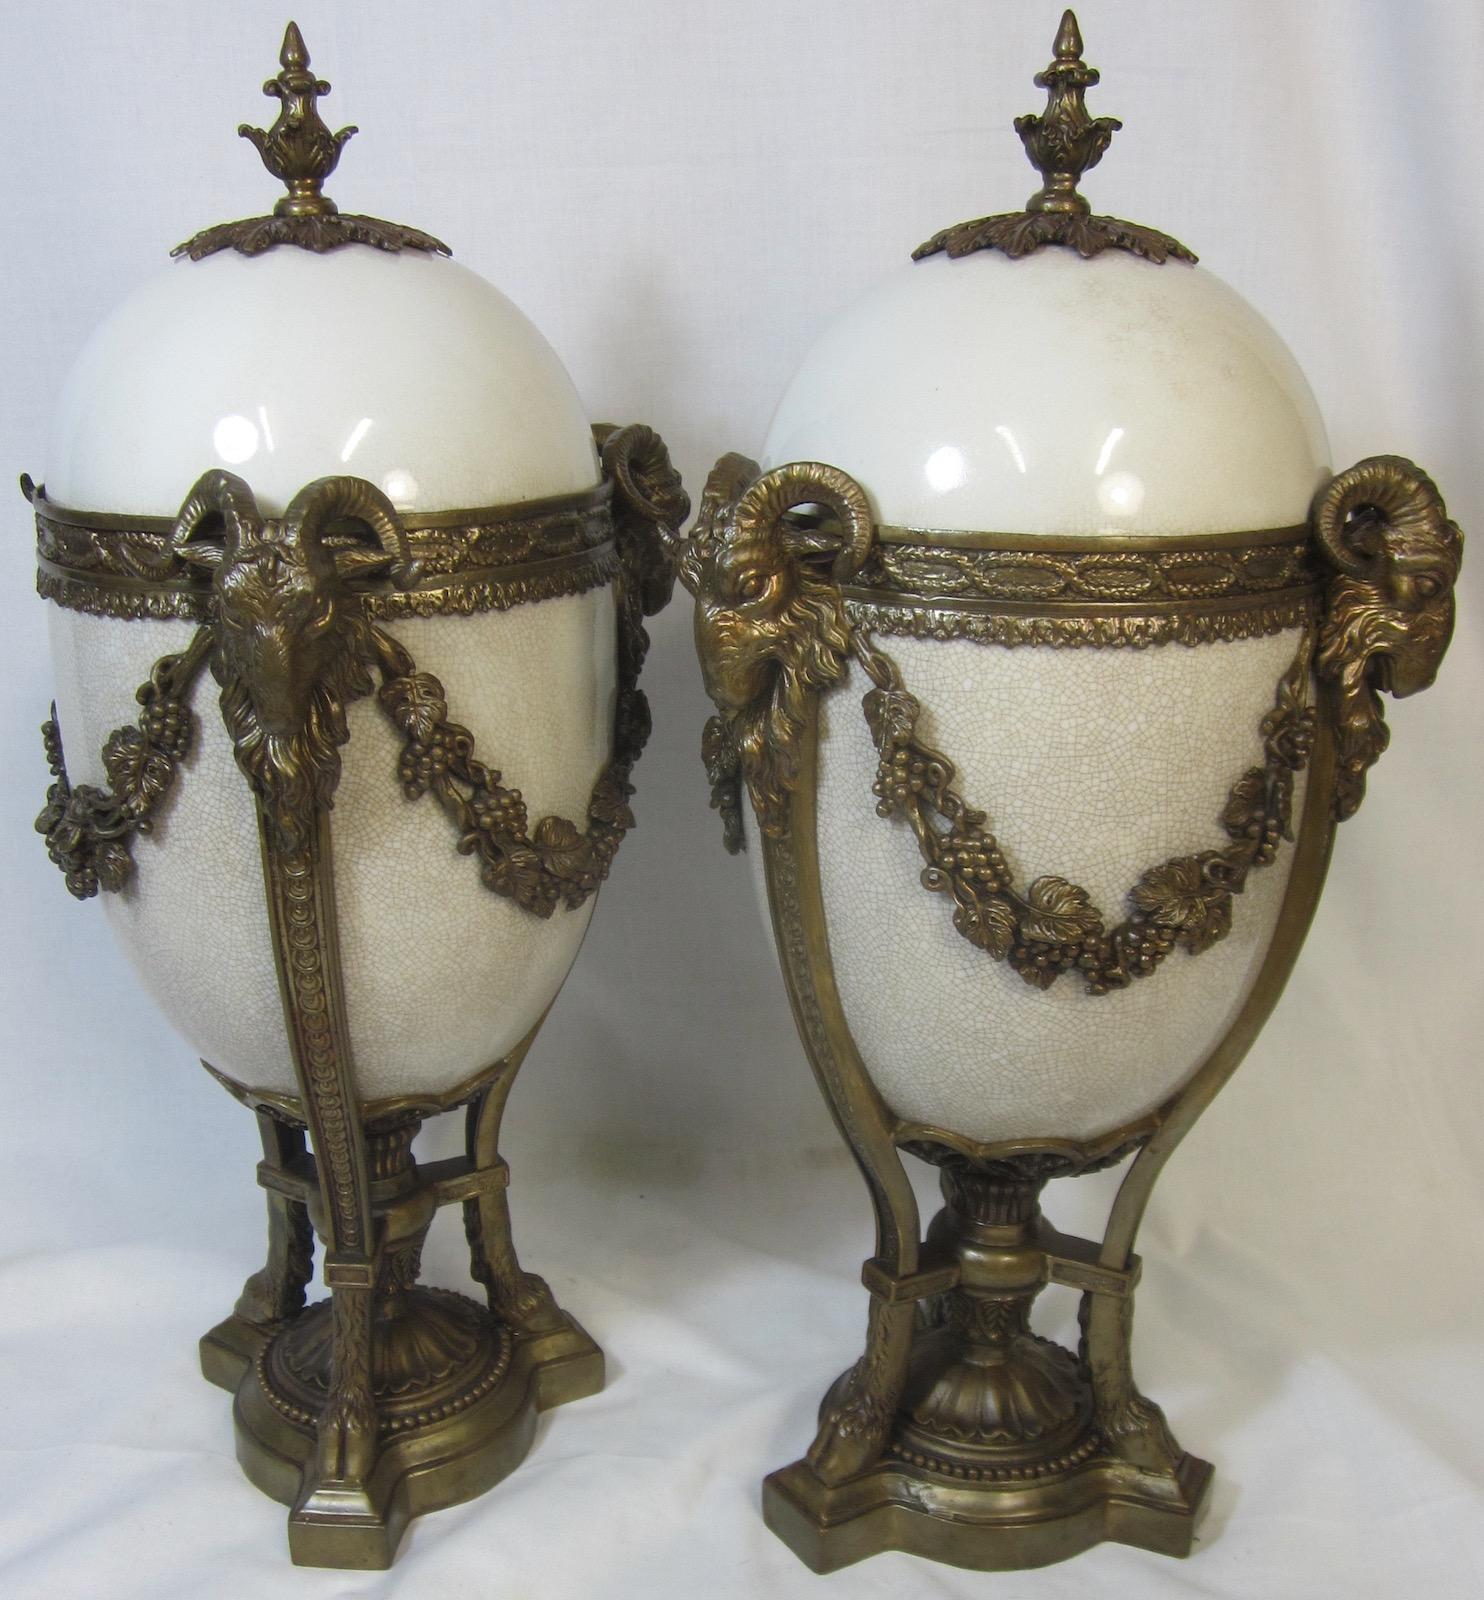 French ceramic and ormolu lidded urn.
Weight: 4.5kg.
 